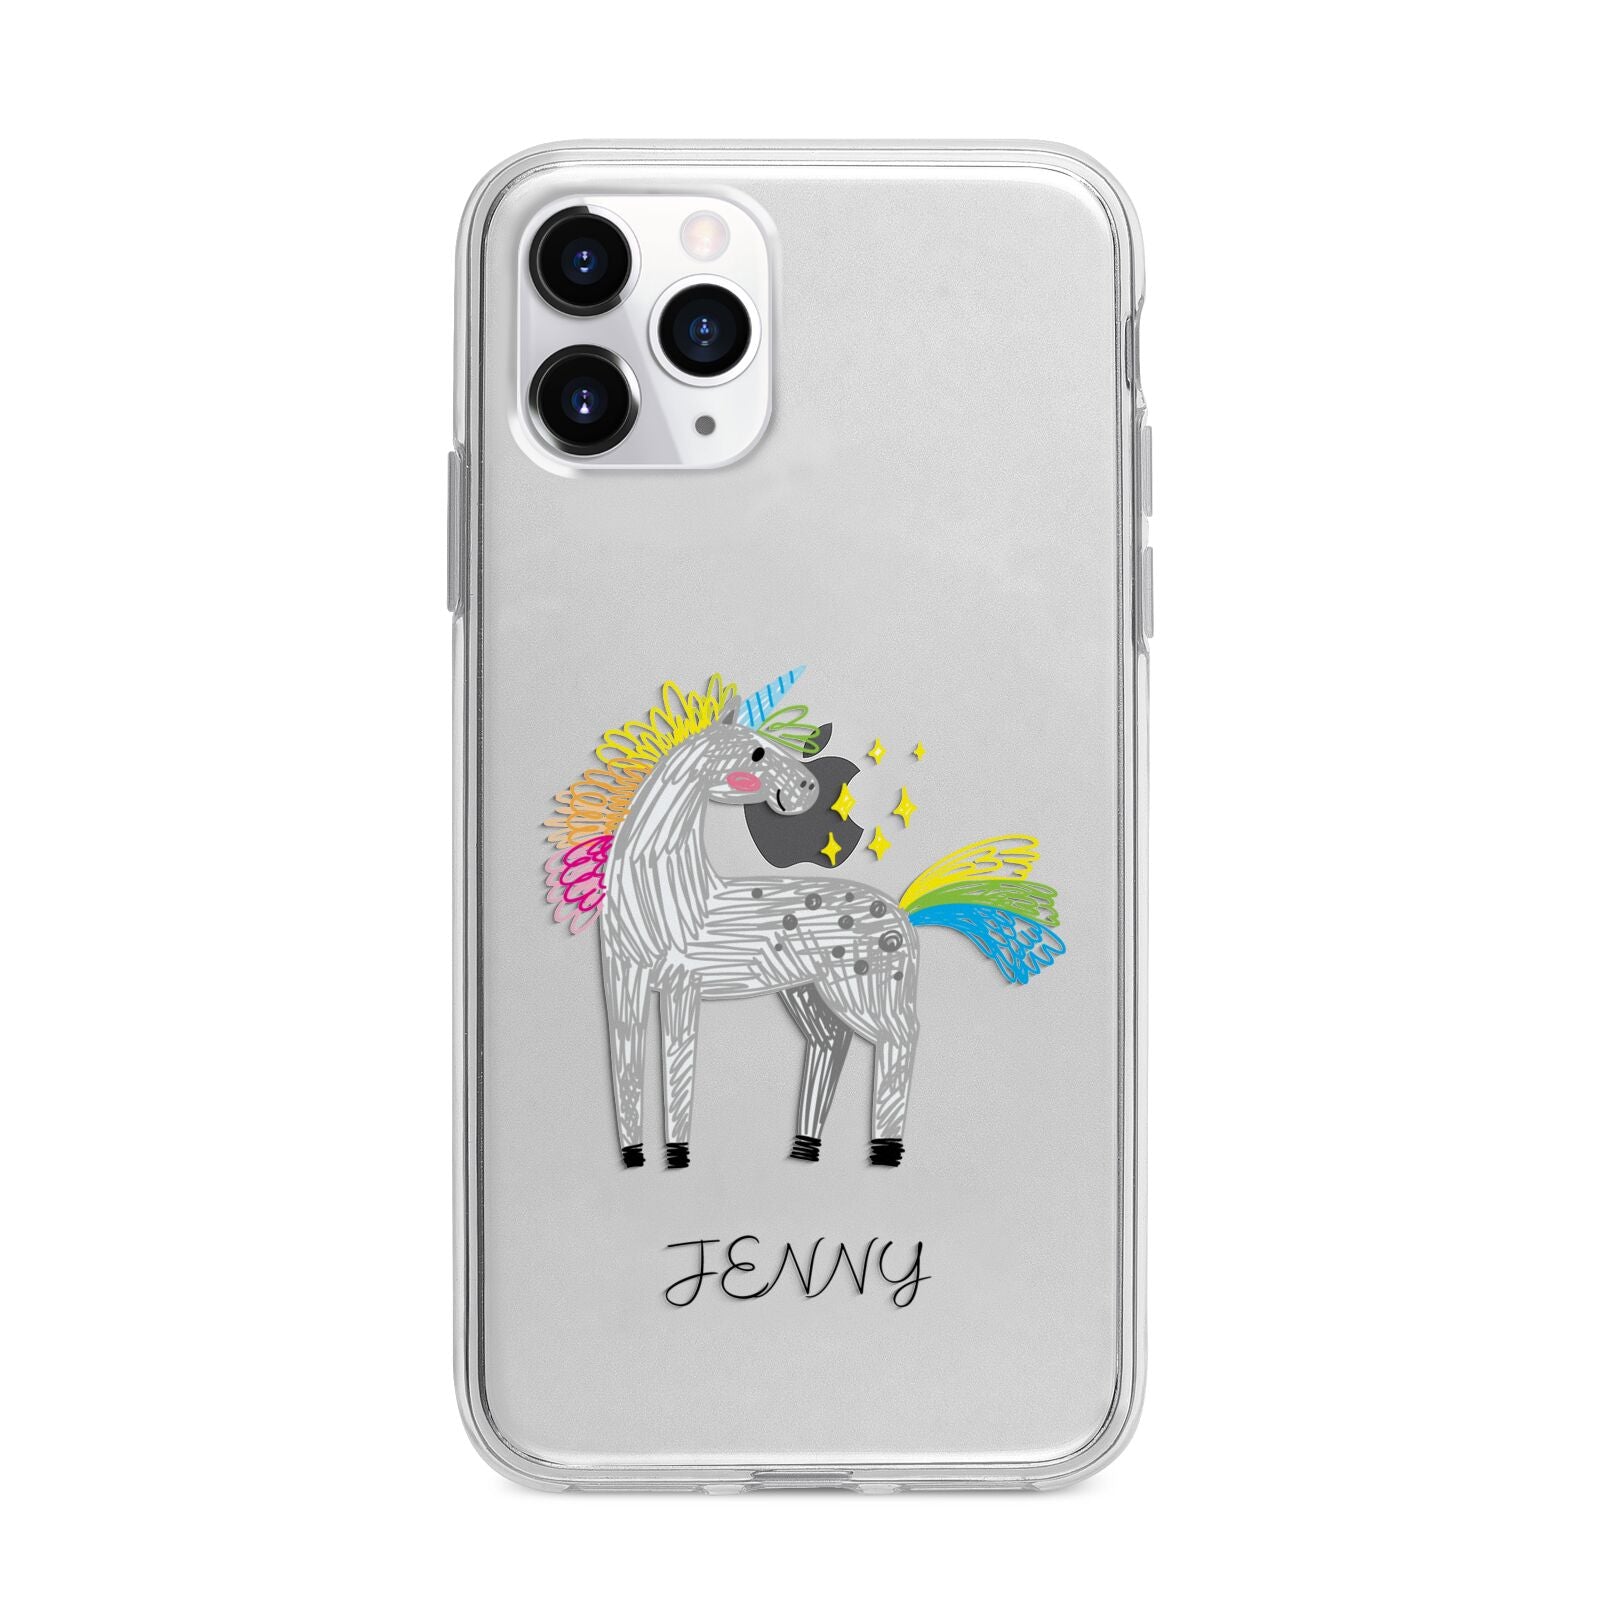 Custom Unicorn Apple iPhone 11 Pro Max in Silver with Bumper Case